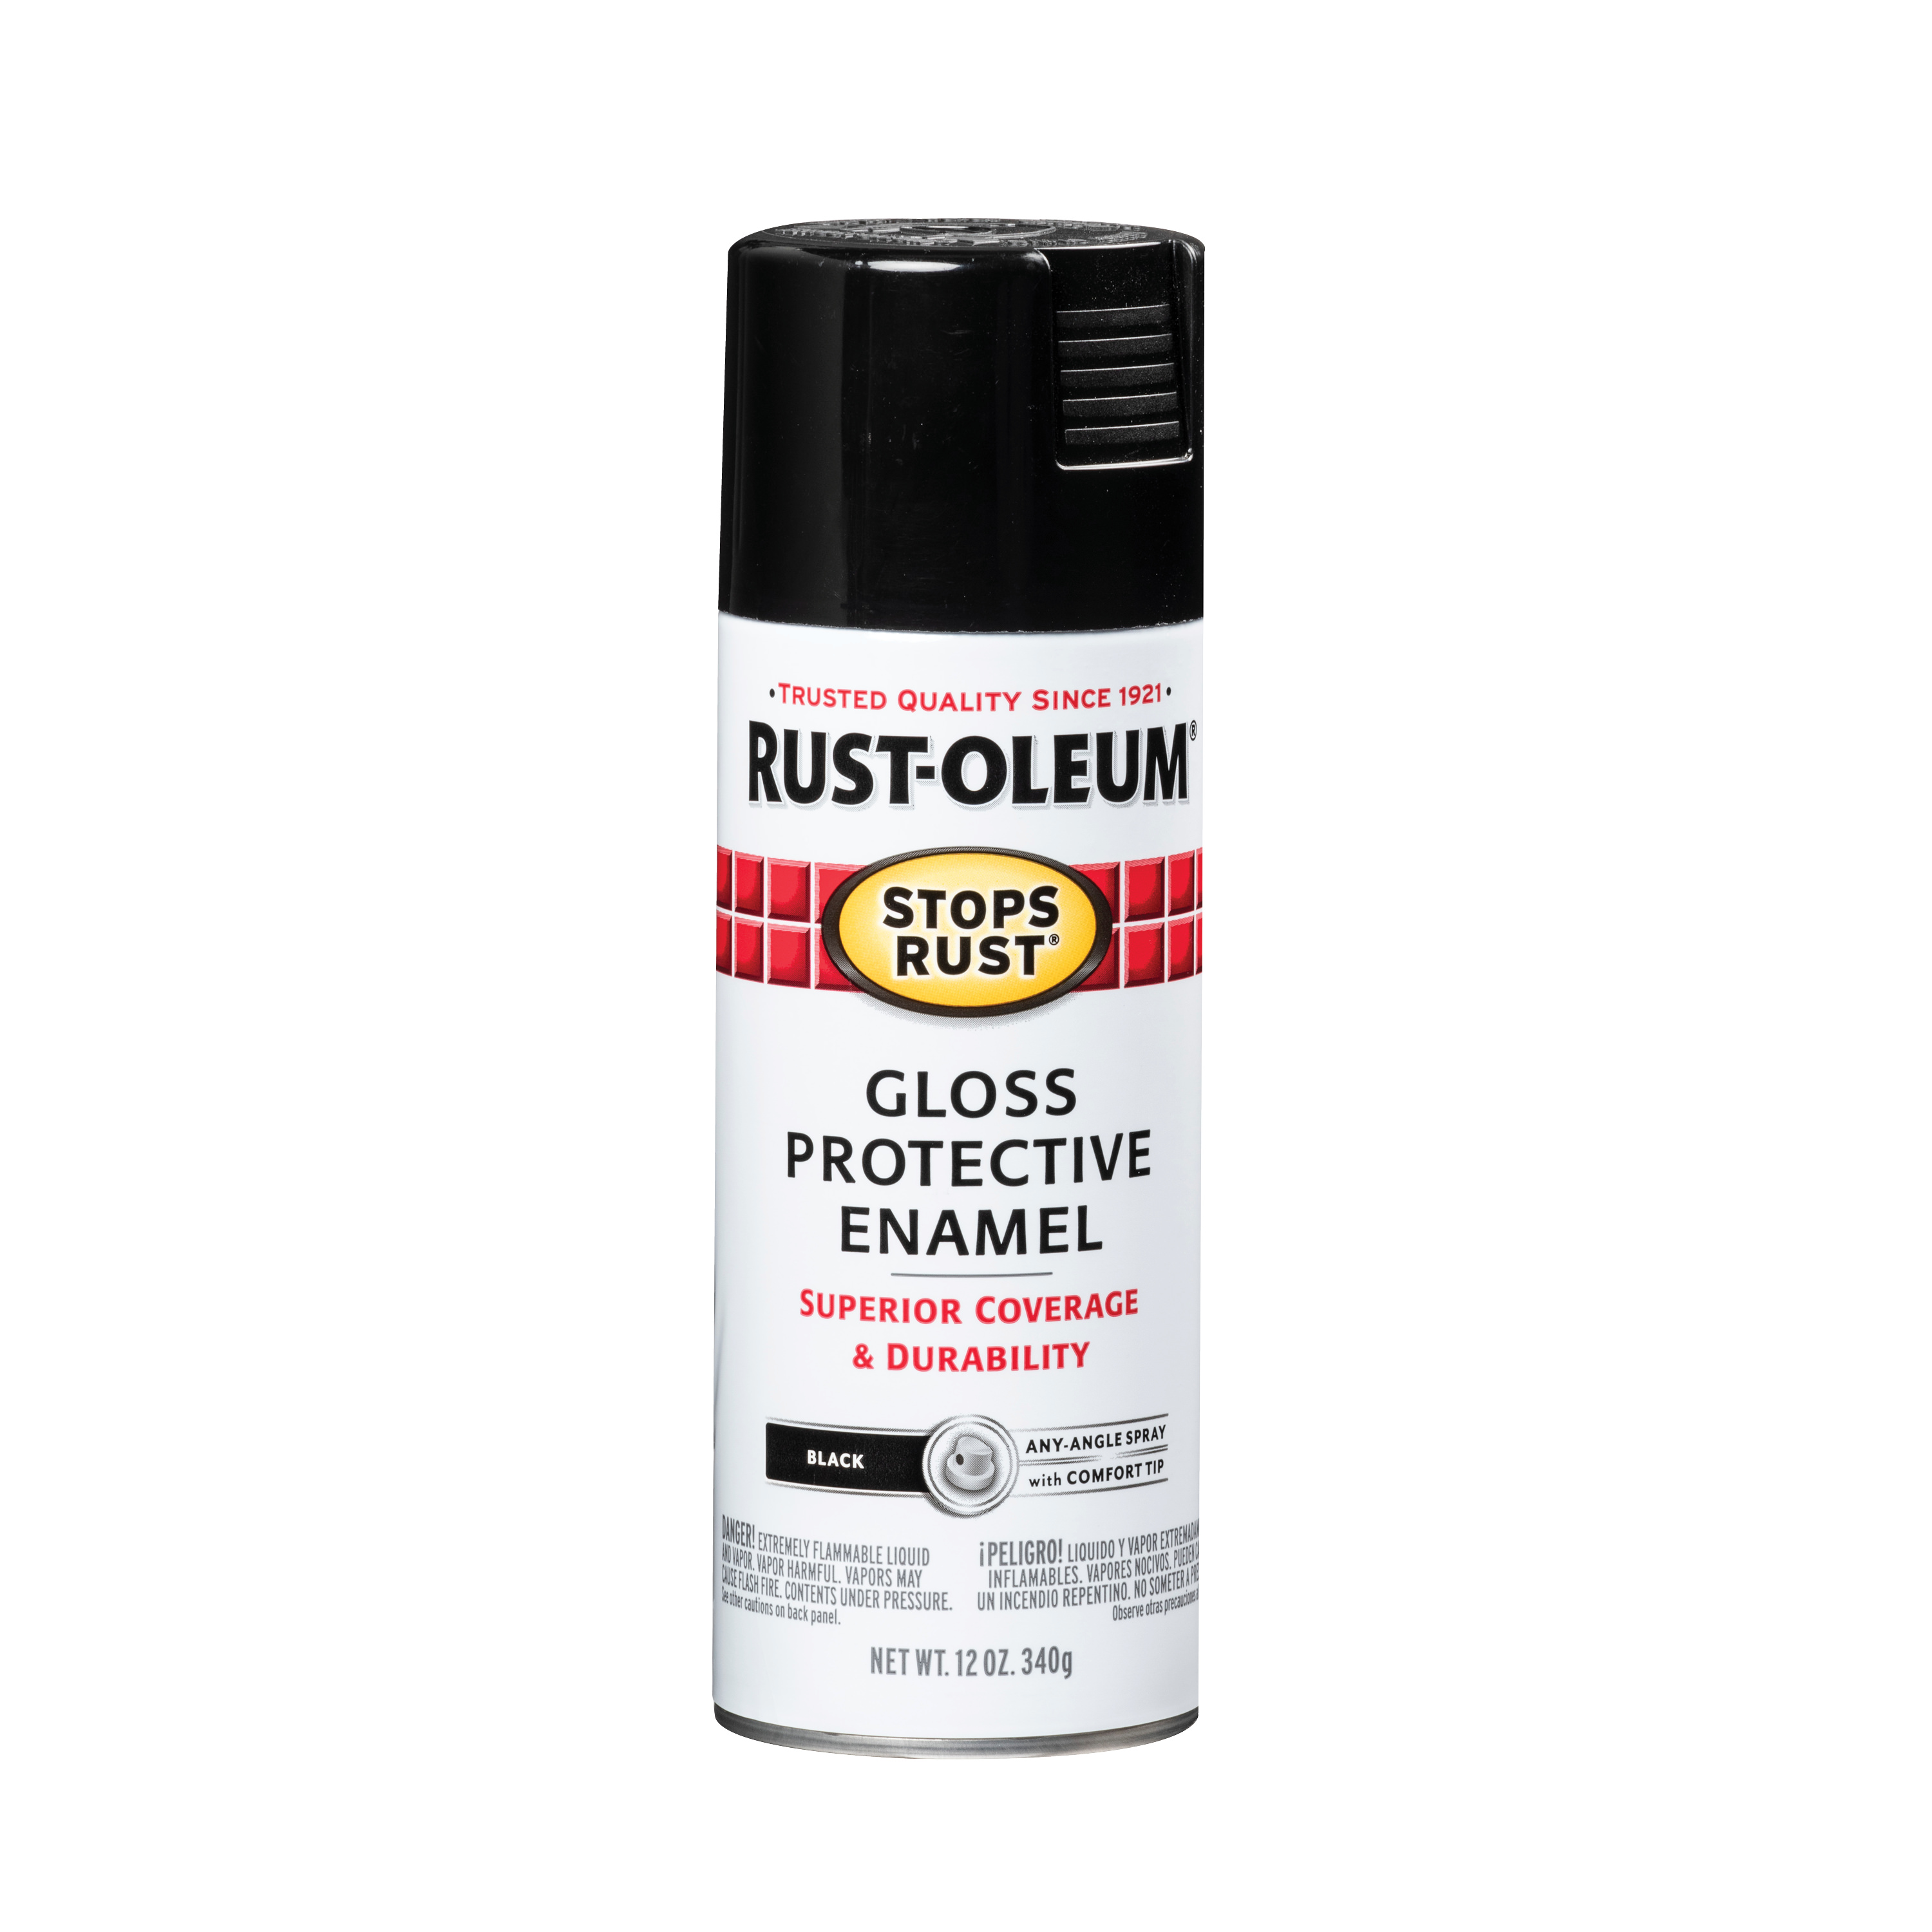 Black, Rust-Oleum Stops Rust Gloss Protective Enamel Spray Paint-7779830, 12 oz - image 3 of 15